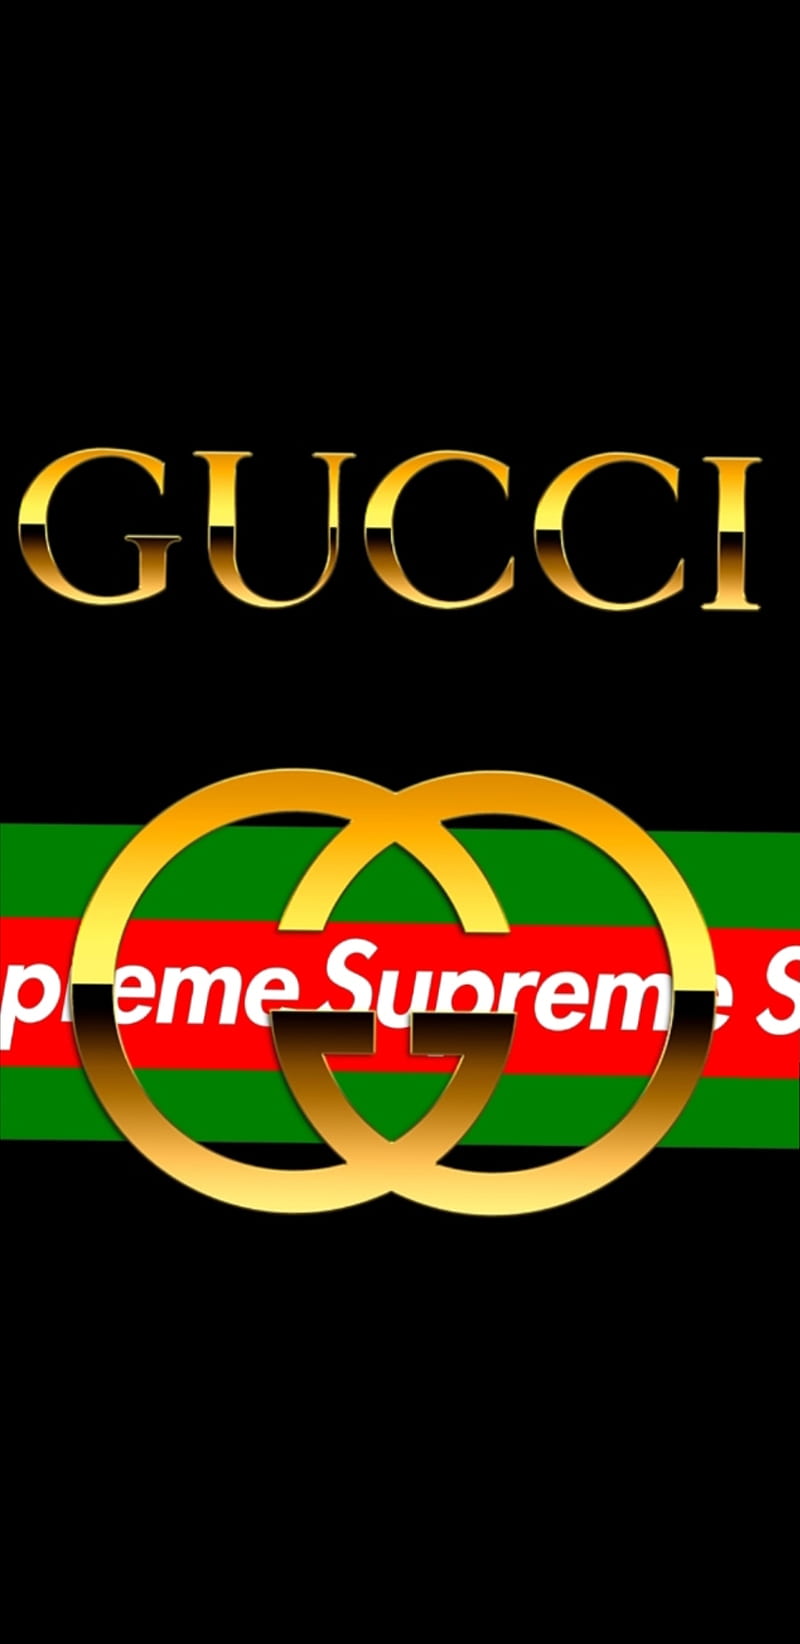 Supreme And Gucci Wallpapers - Wallpaper Cave  Supreme wallpaper, Supreme  iphone wallpaper, Hypebeast wallpaper